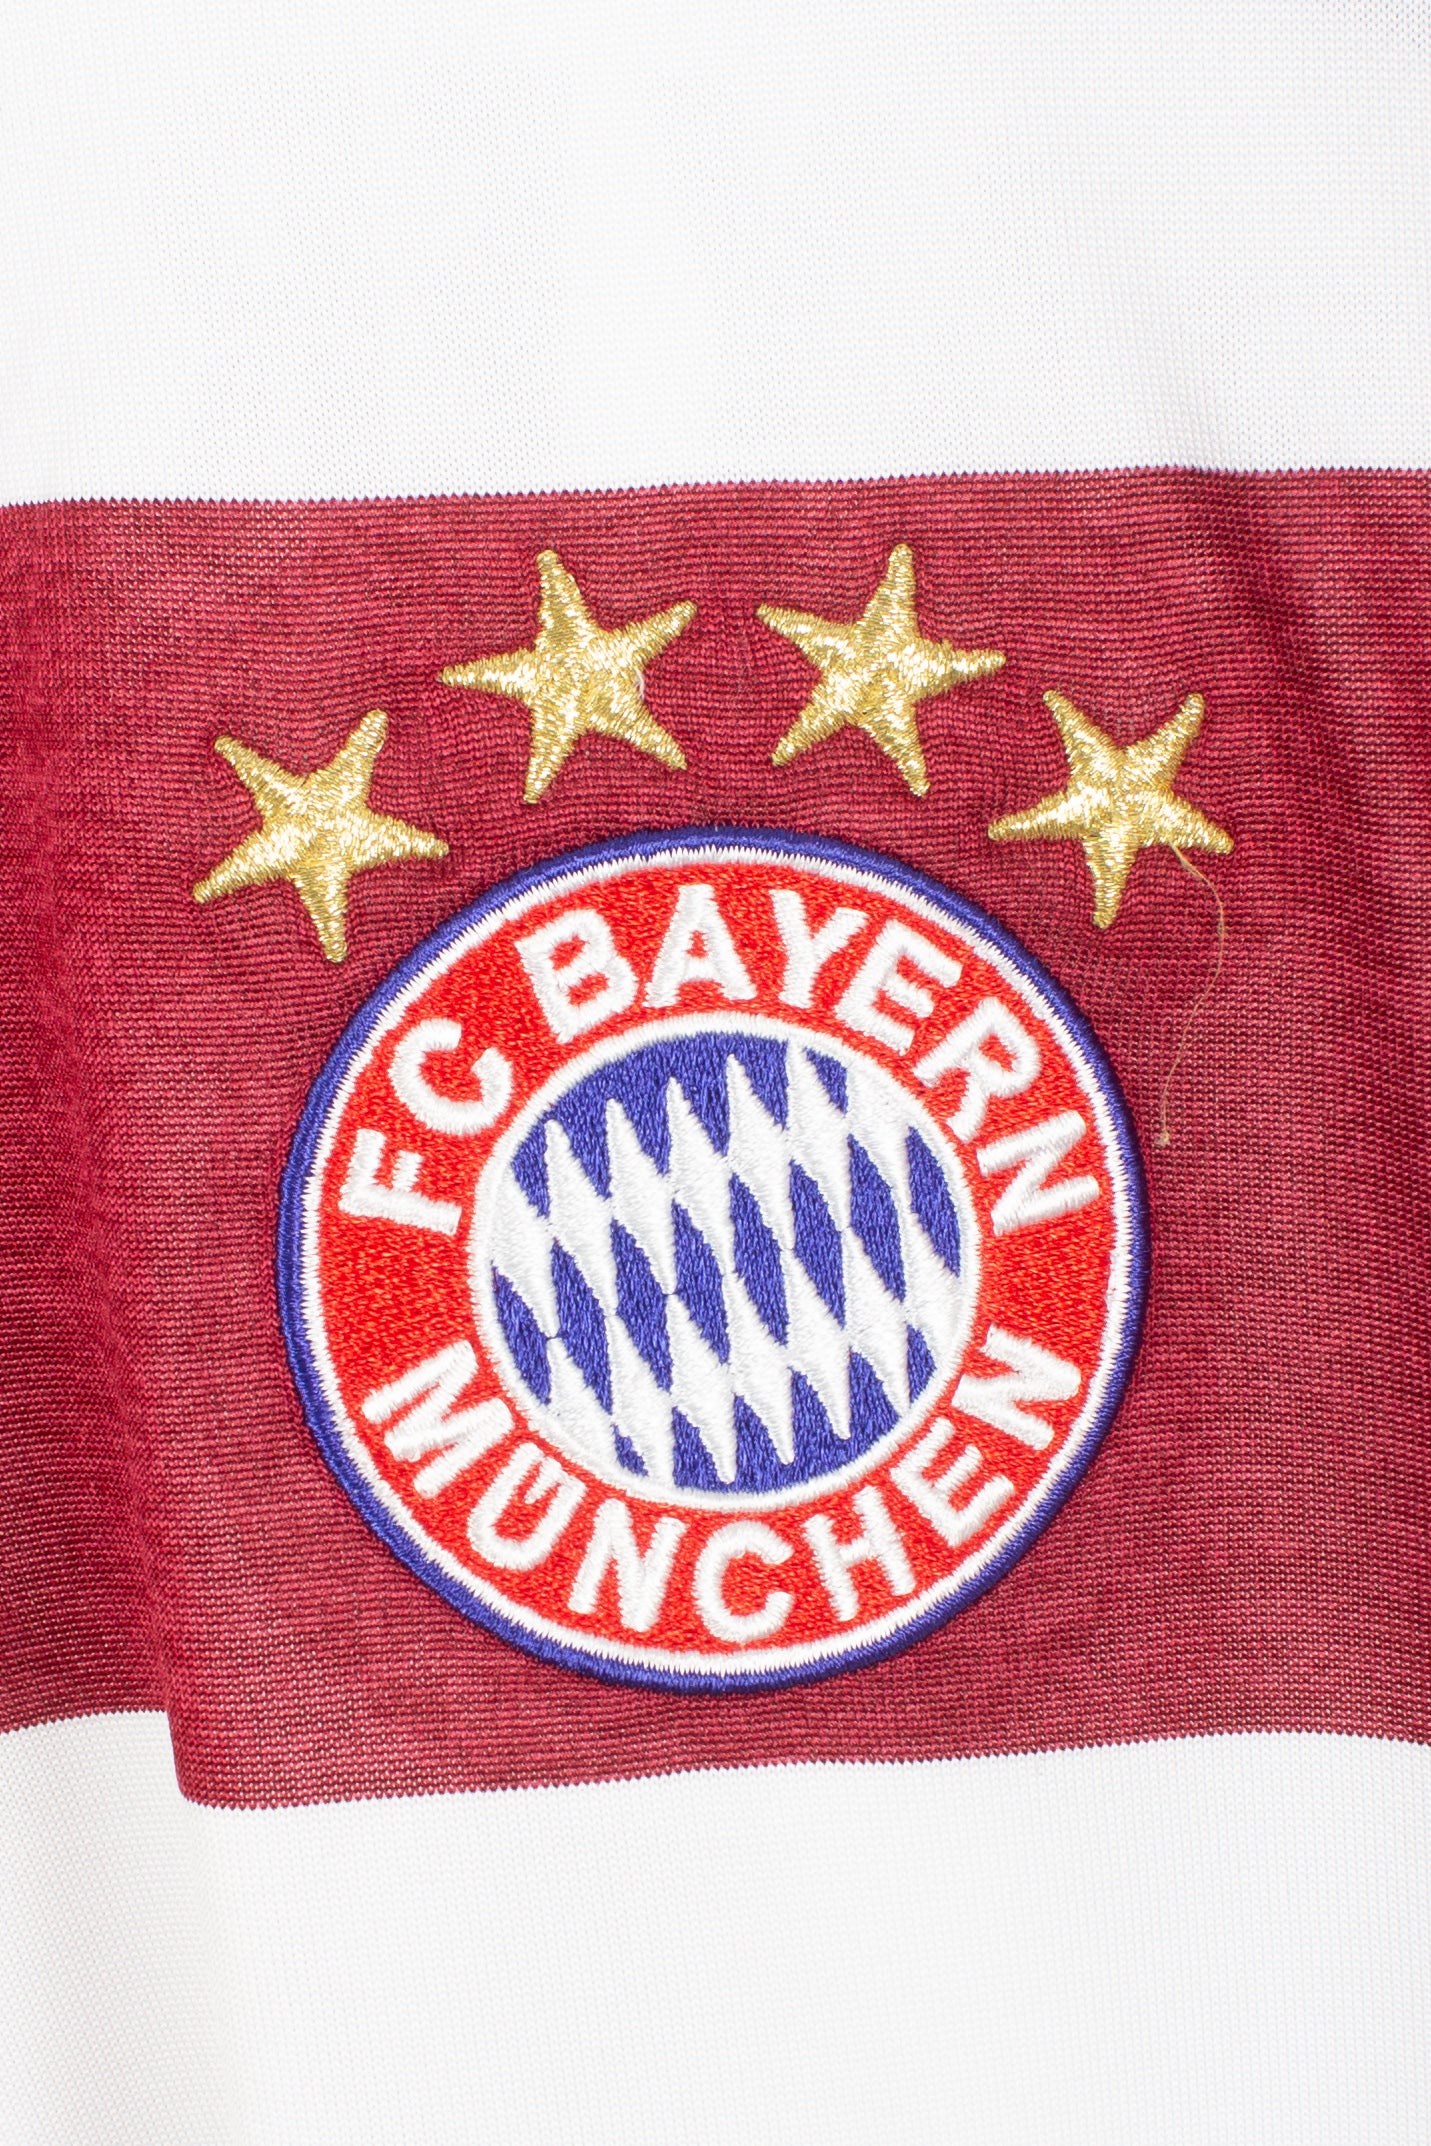 Bayern Munich 2014/15 Away Shirt (Thiago #6) (XL)